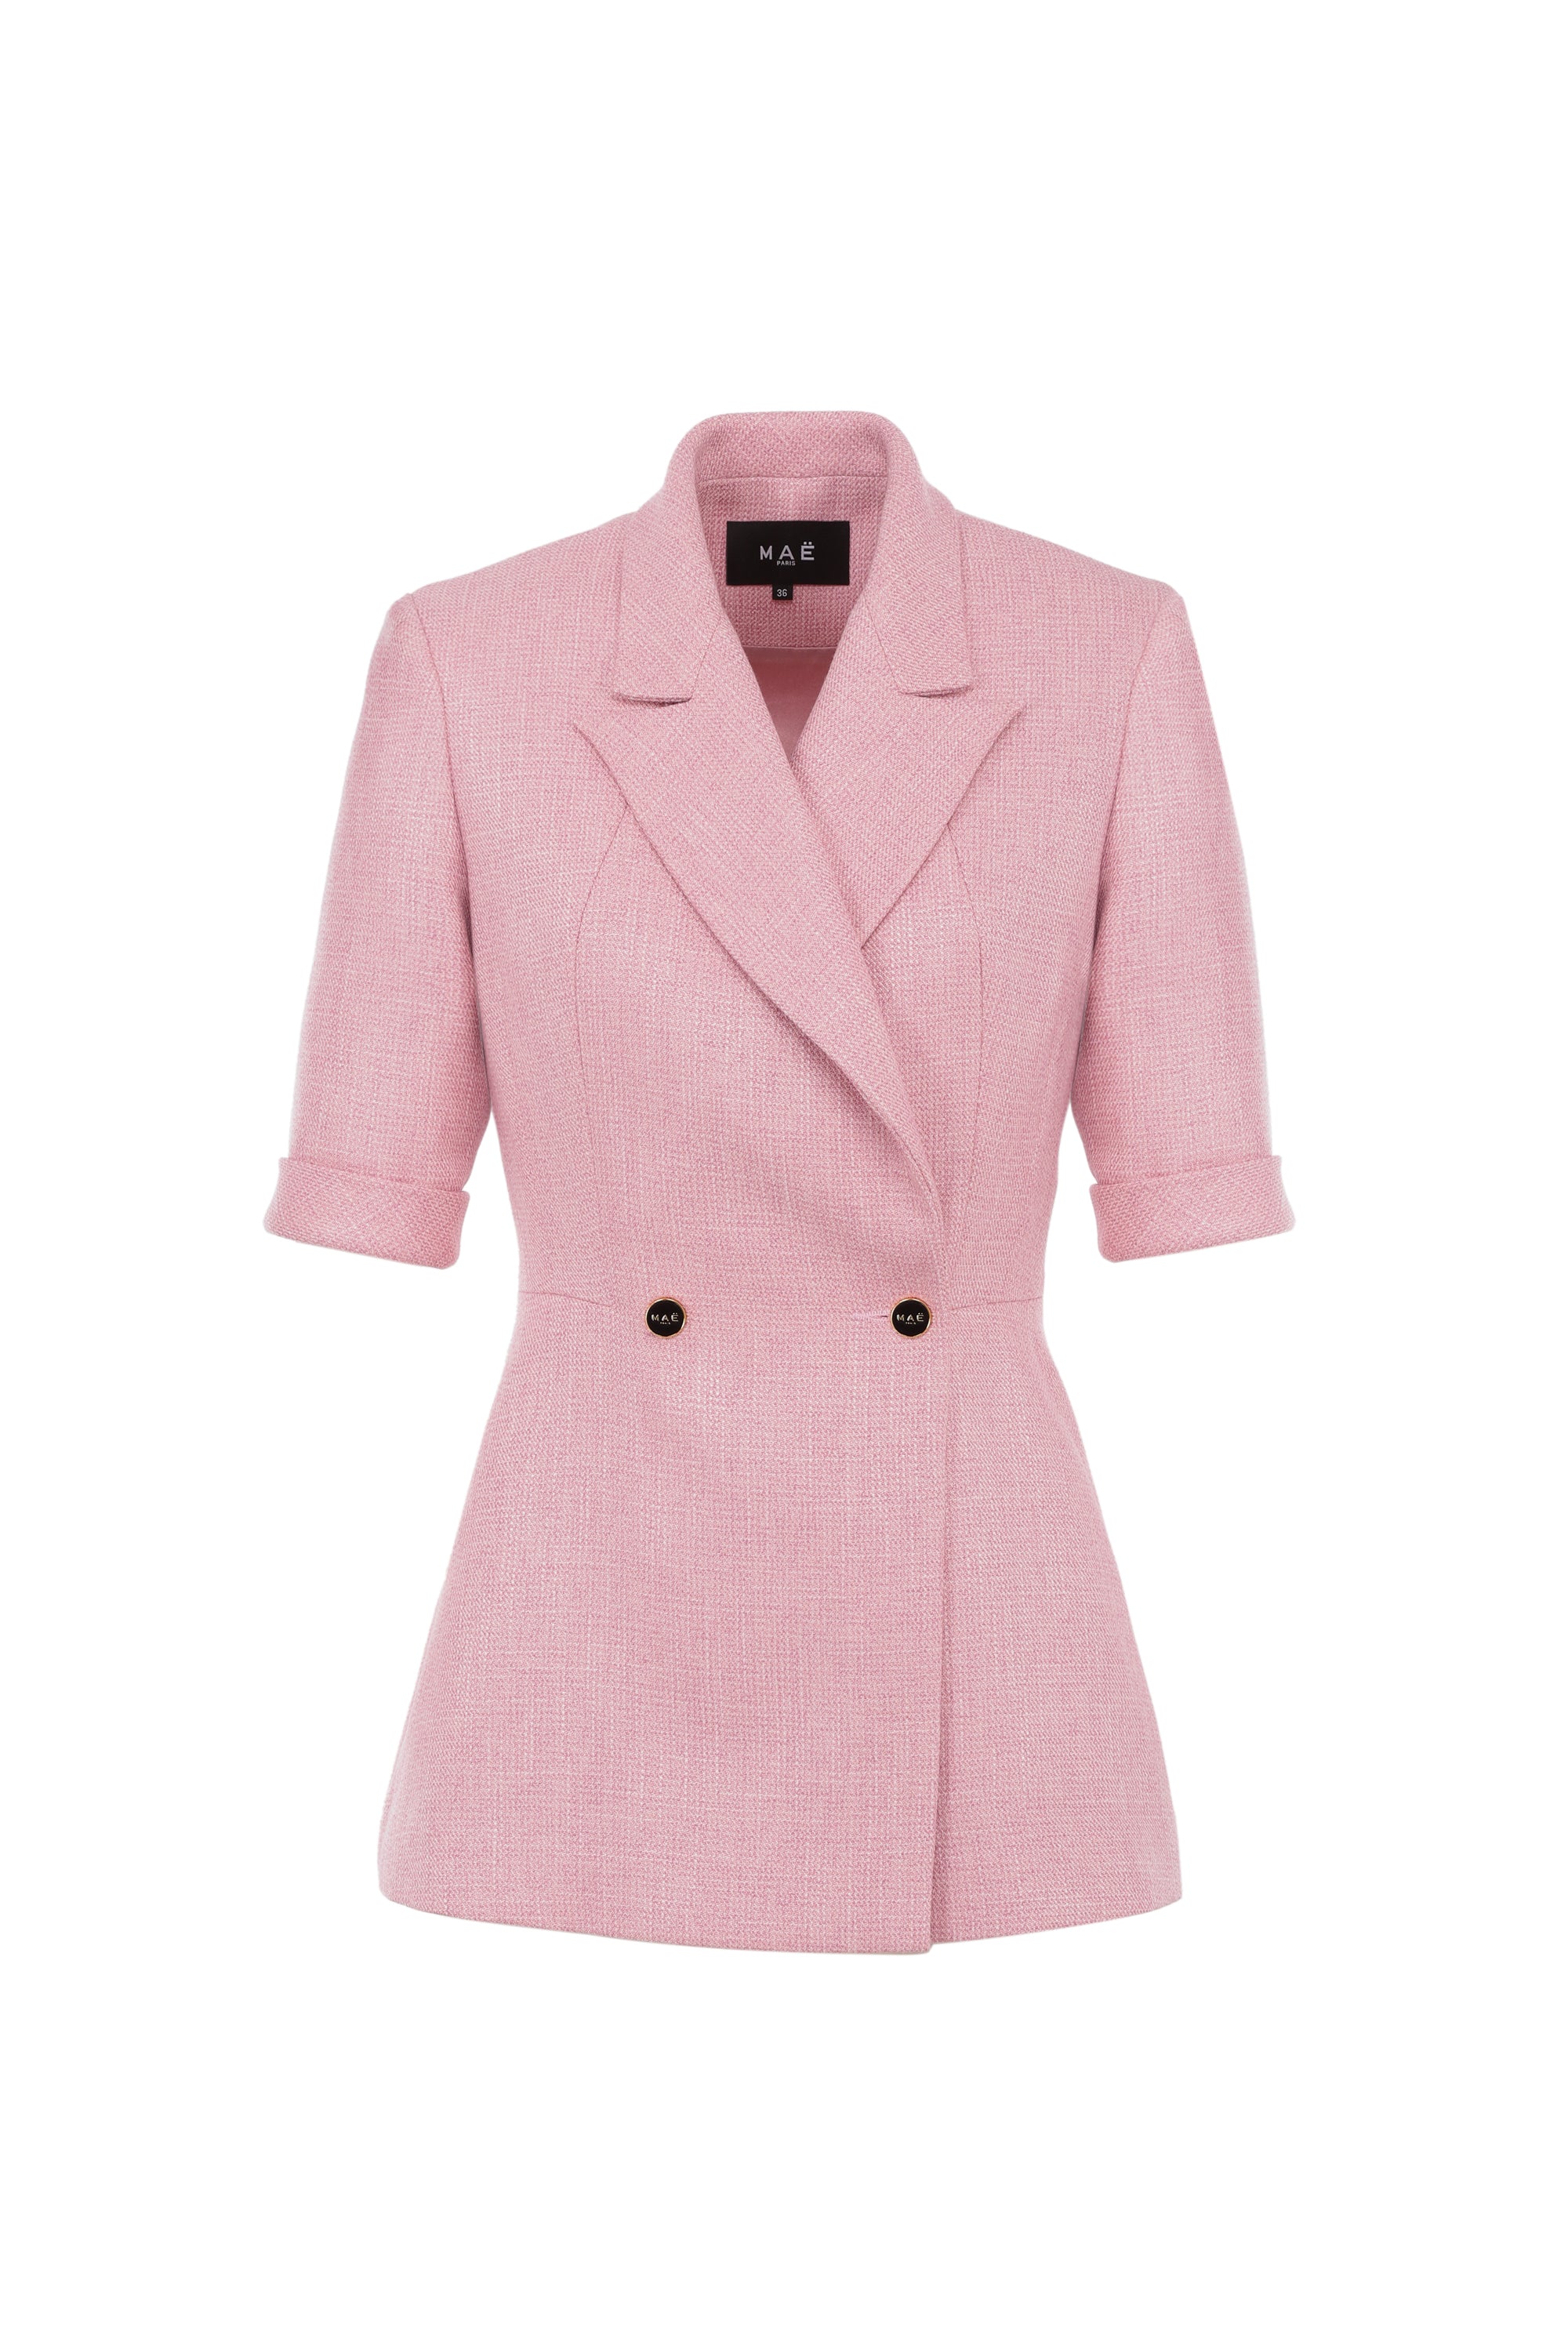 Assurance jacket in pink tweed with short sleeves